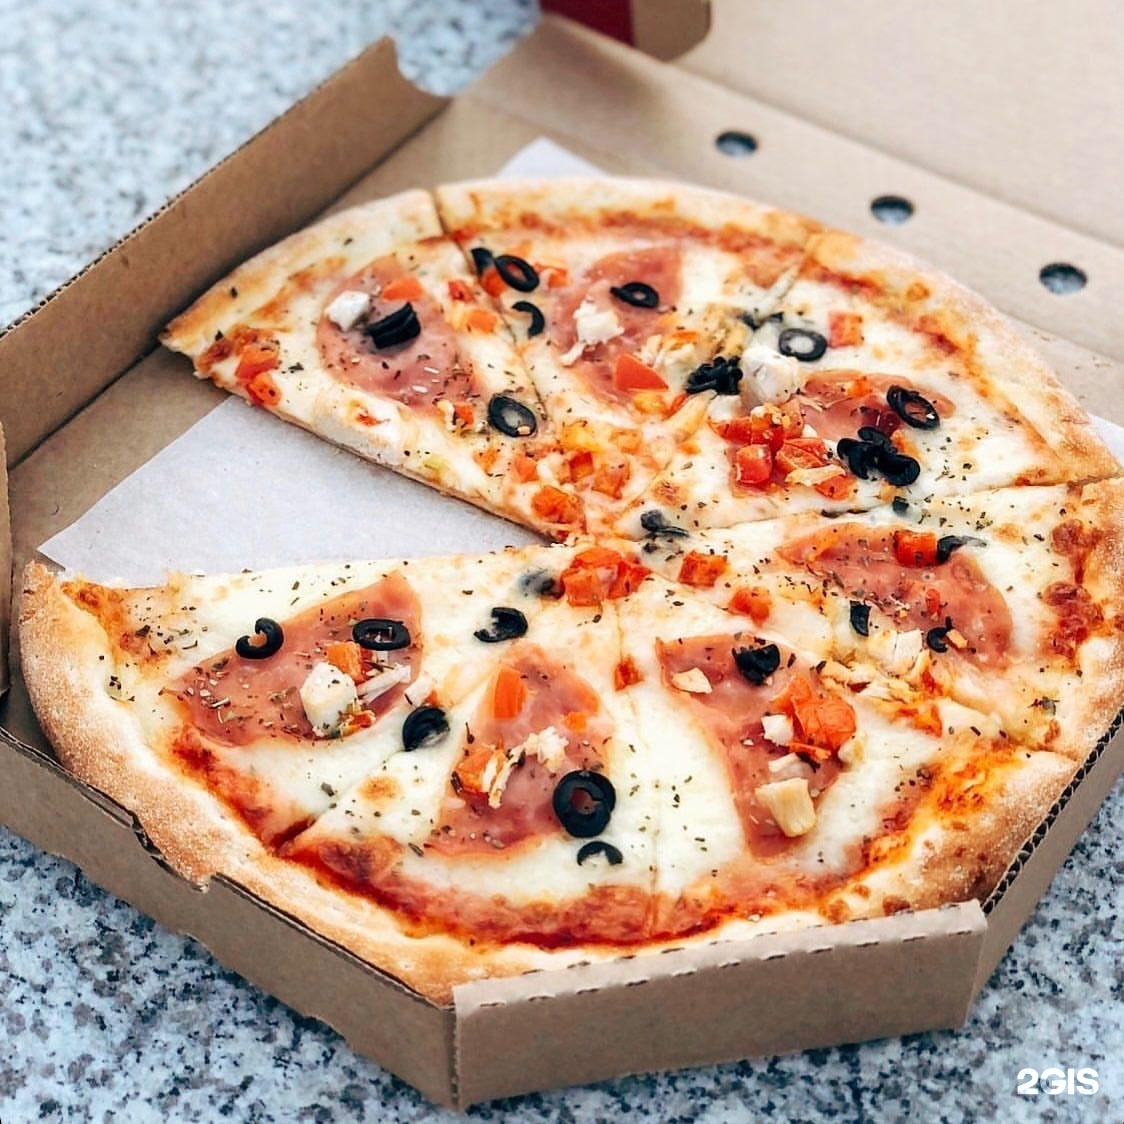 сливочная начинка на пиццу фото 46